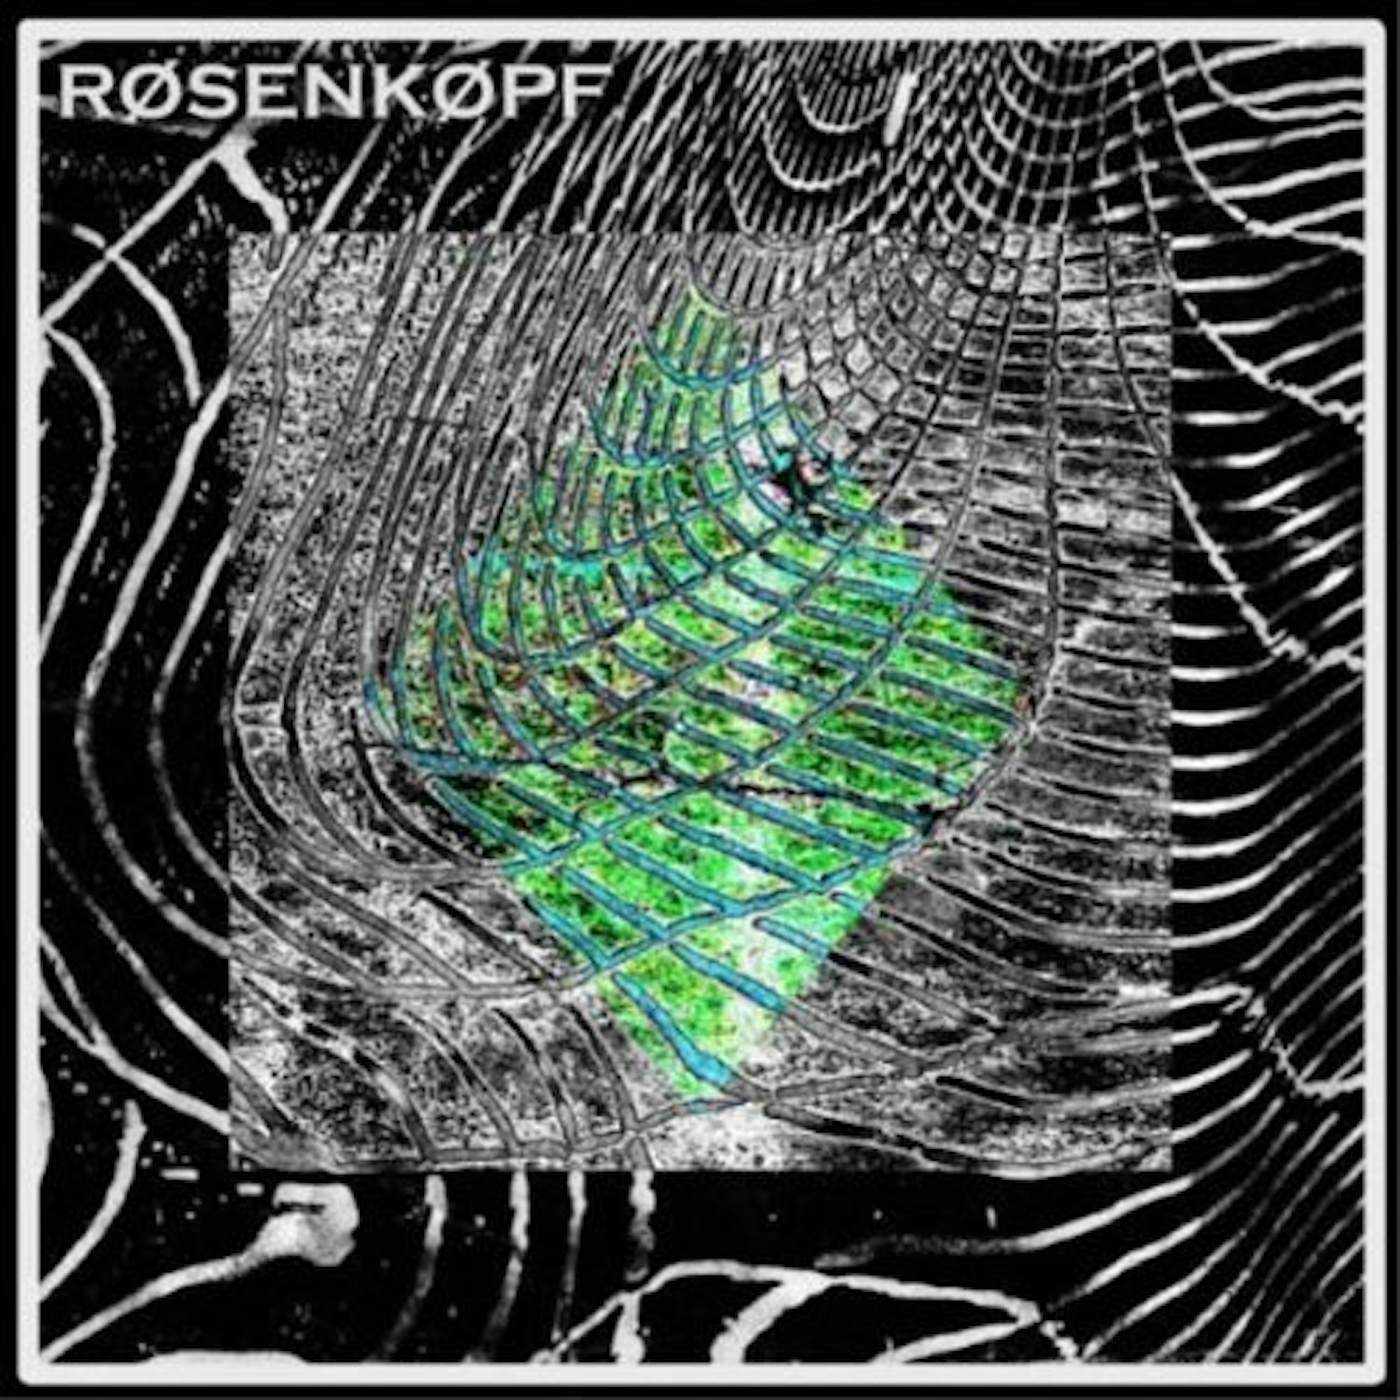 ROSENKOPF Vinyl Record